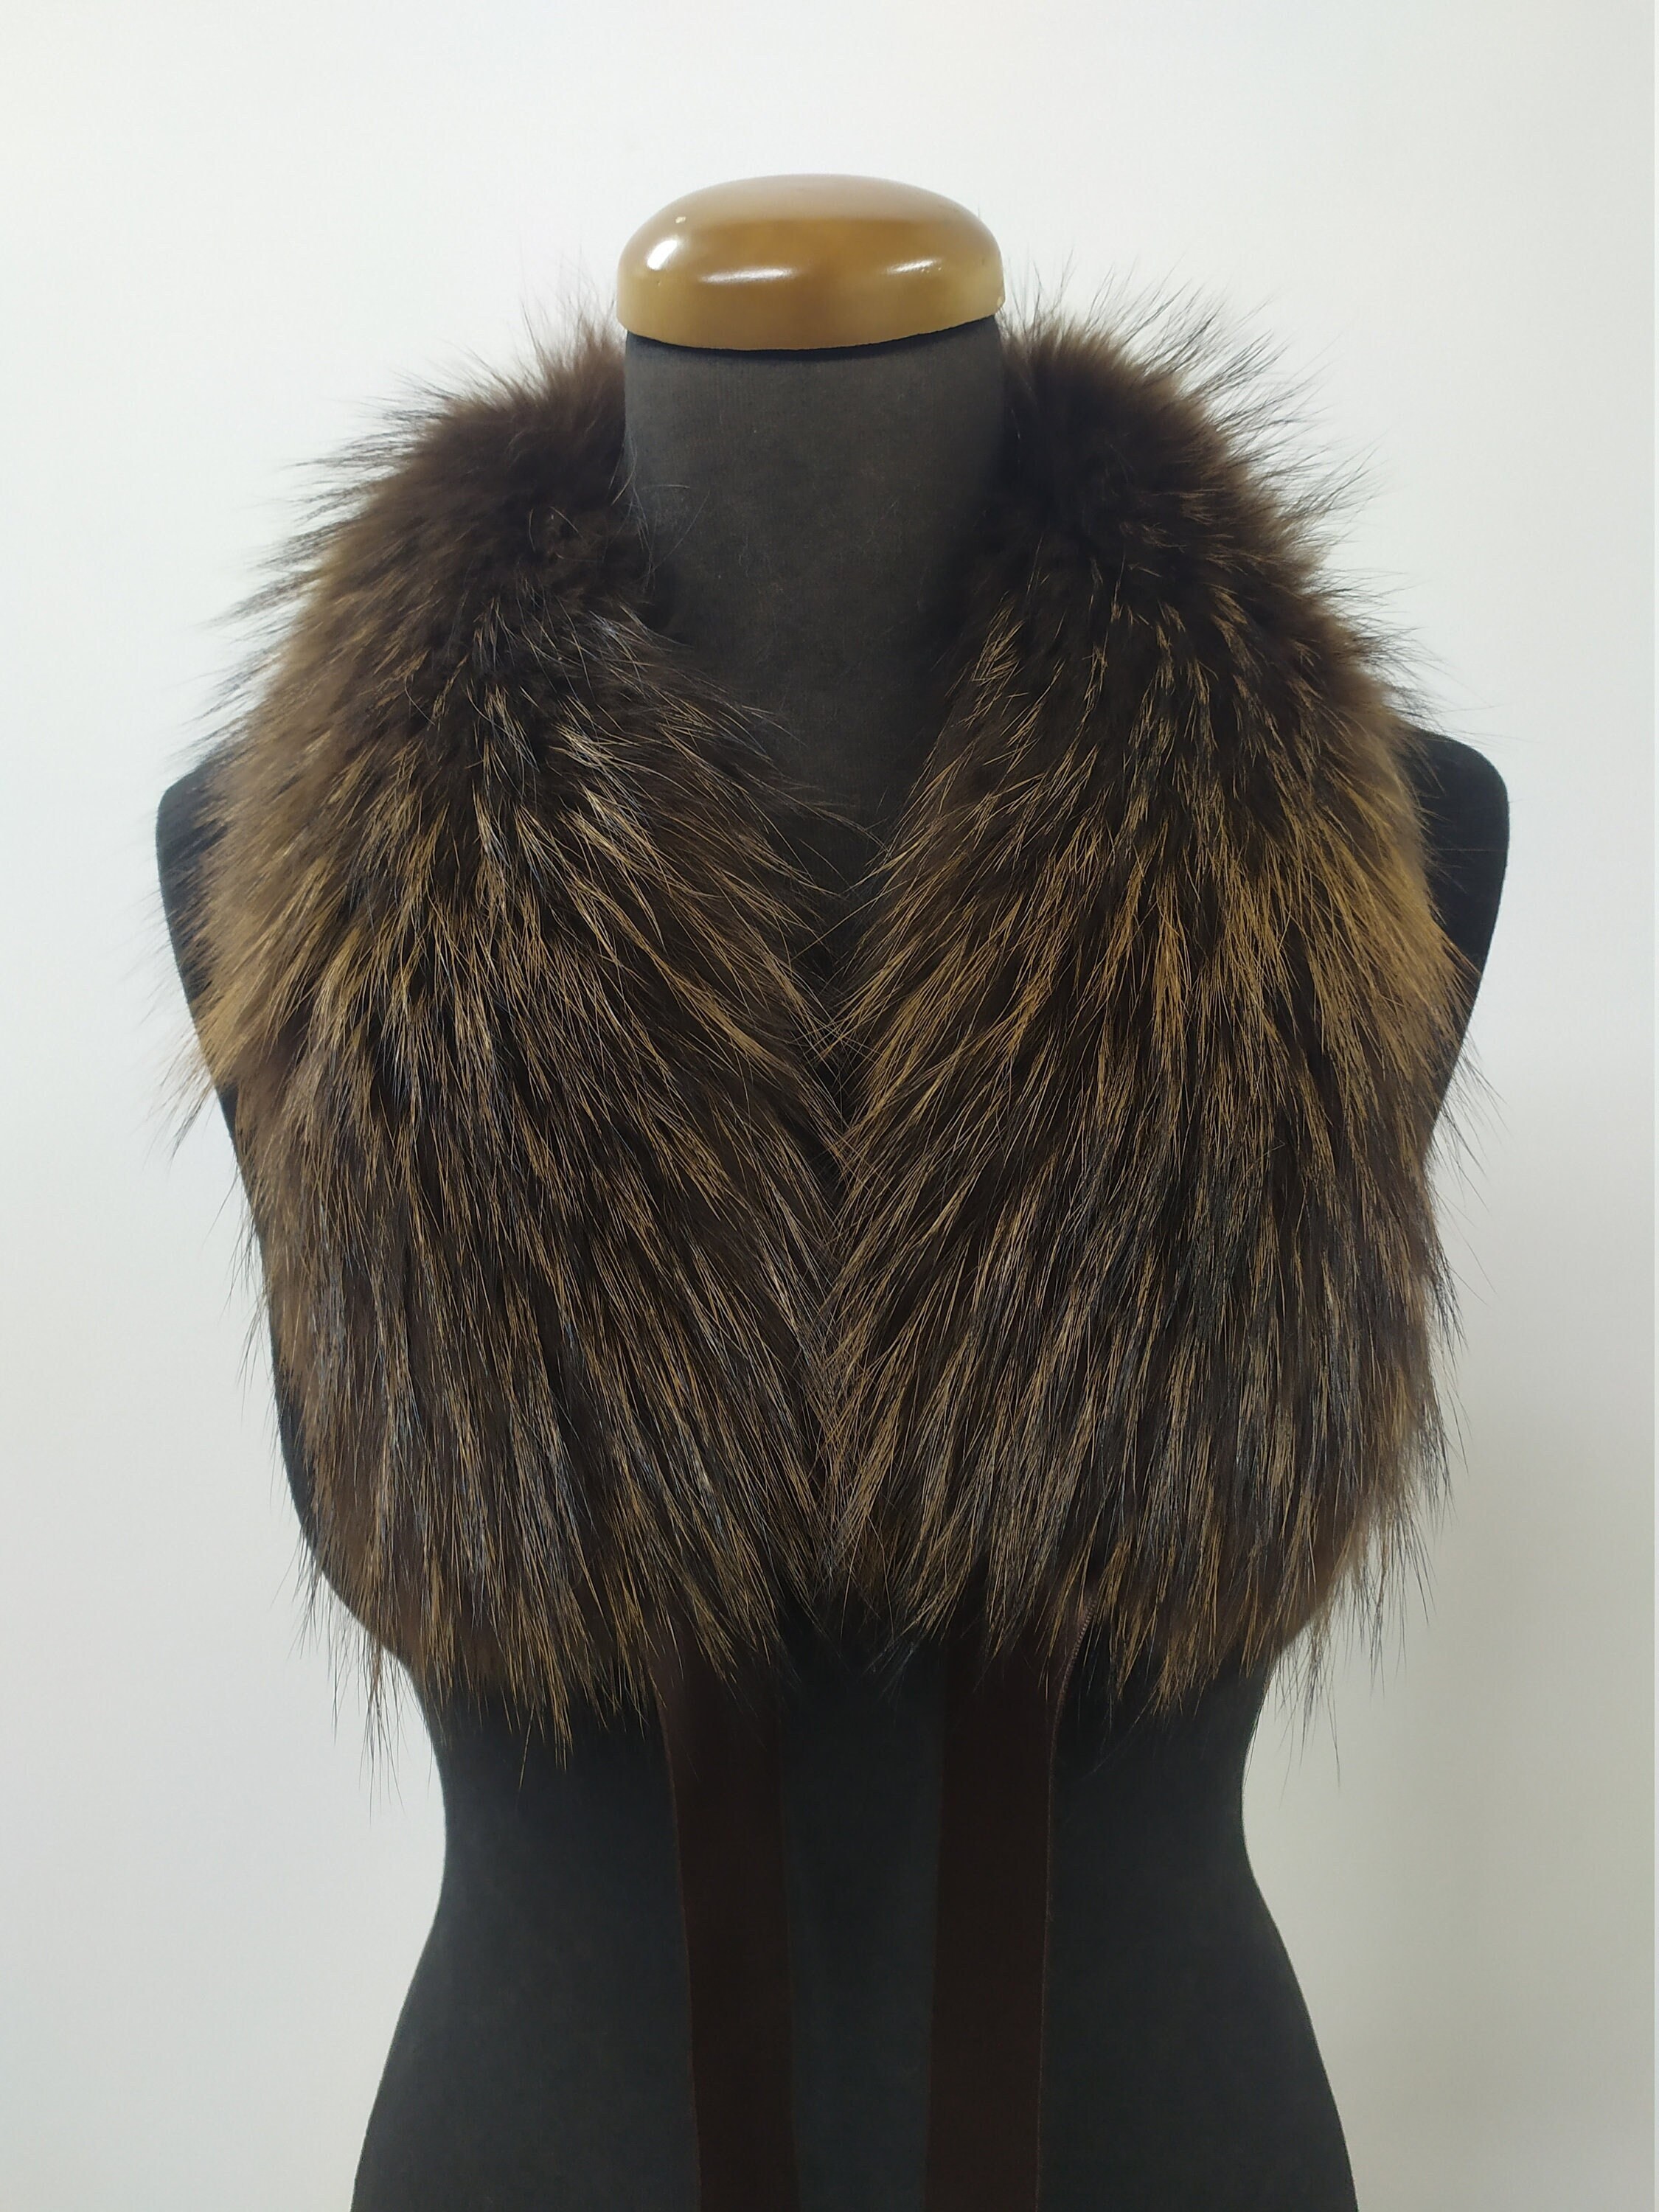 coat winter accessories Finn raccoon high quality fur collar